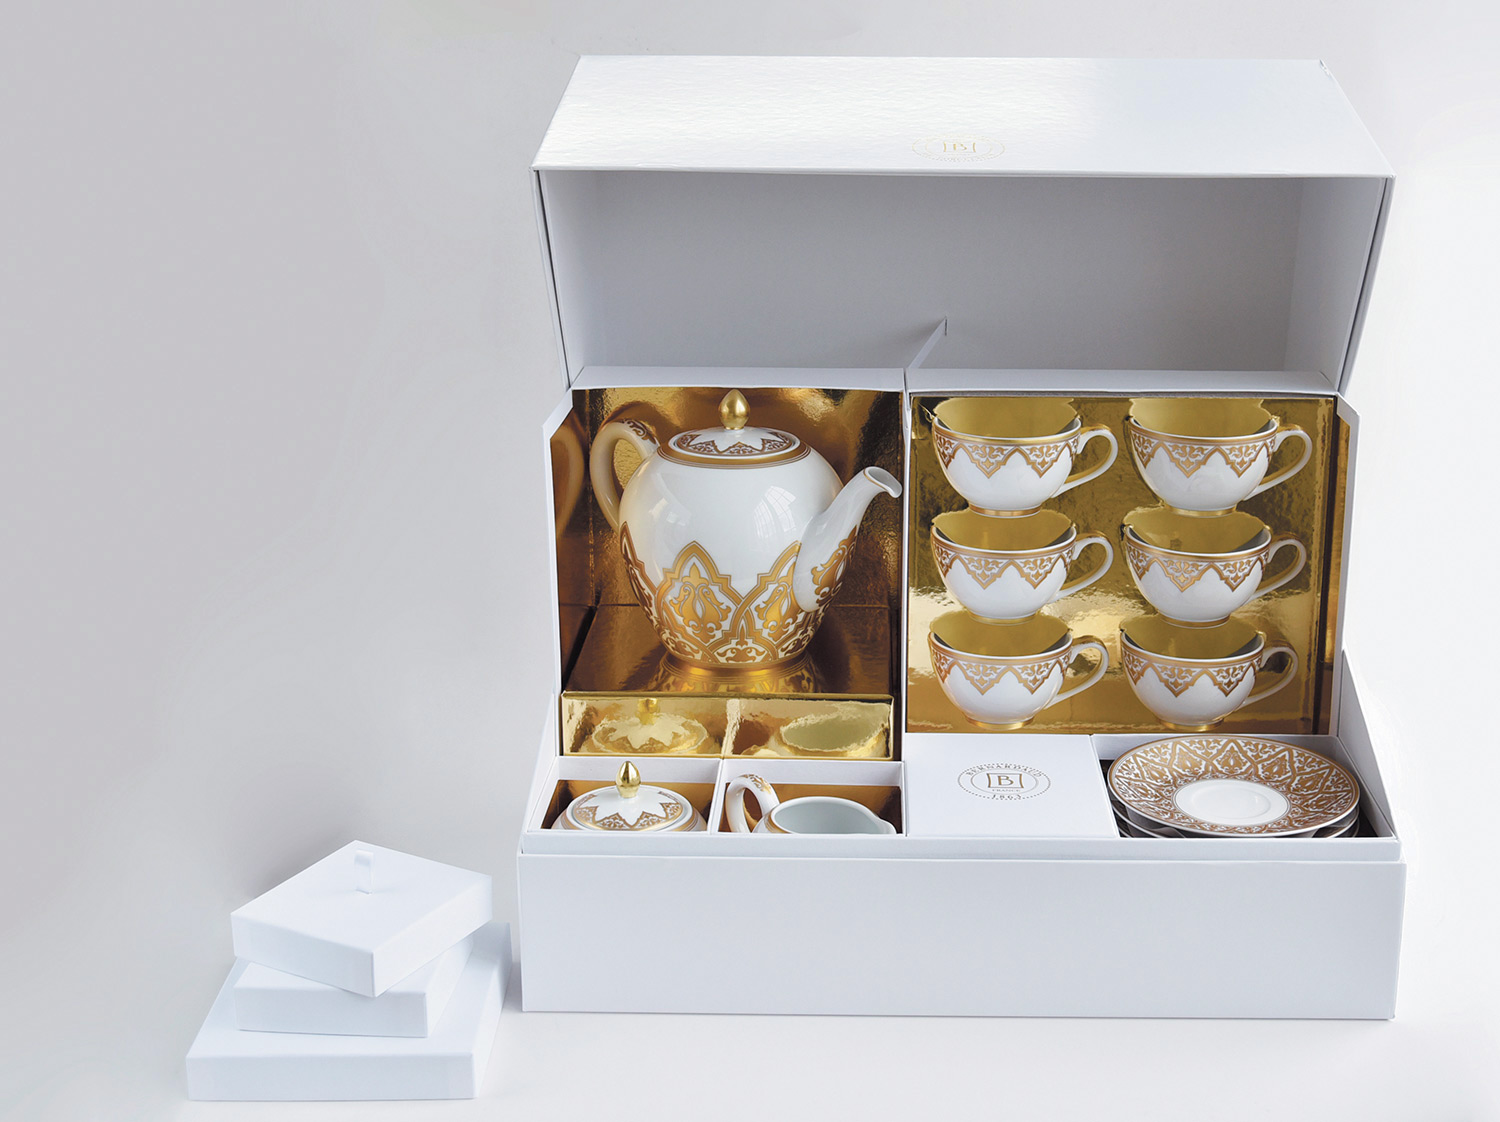 China Tea gift case (teapot, creamer, sugar bowl, 6 tea cups and saucers) of the collection Venise | Bernardaud